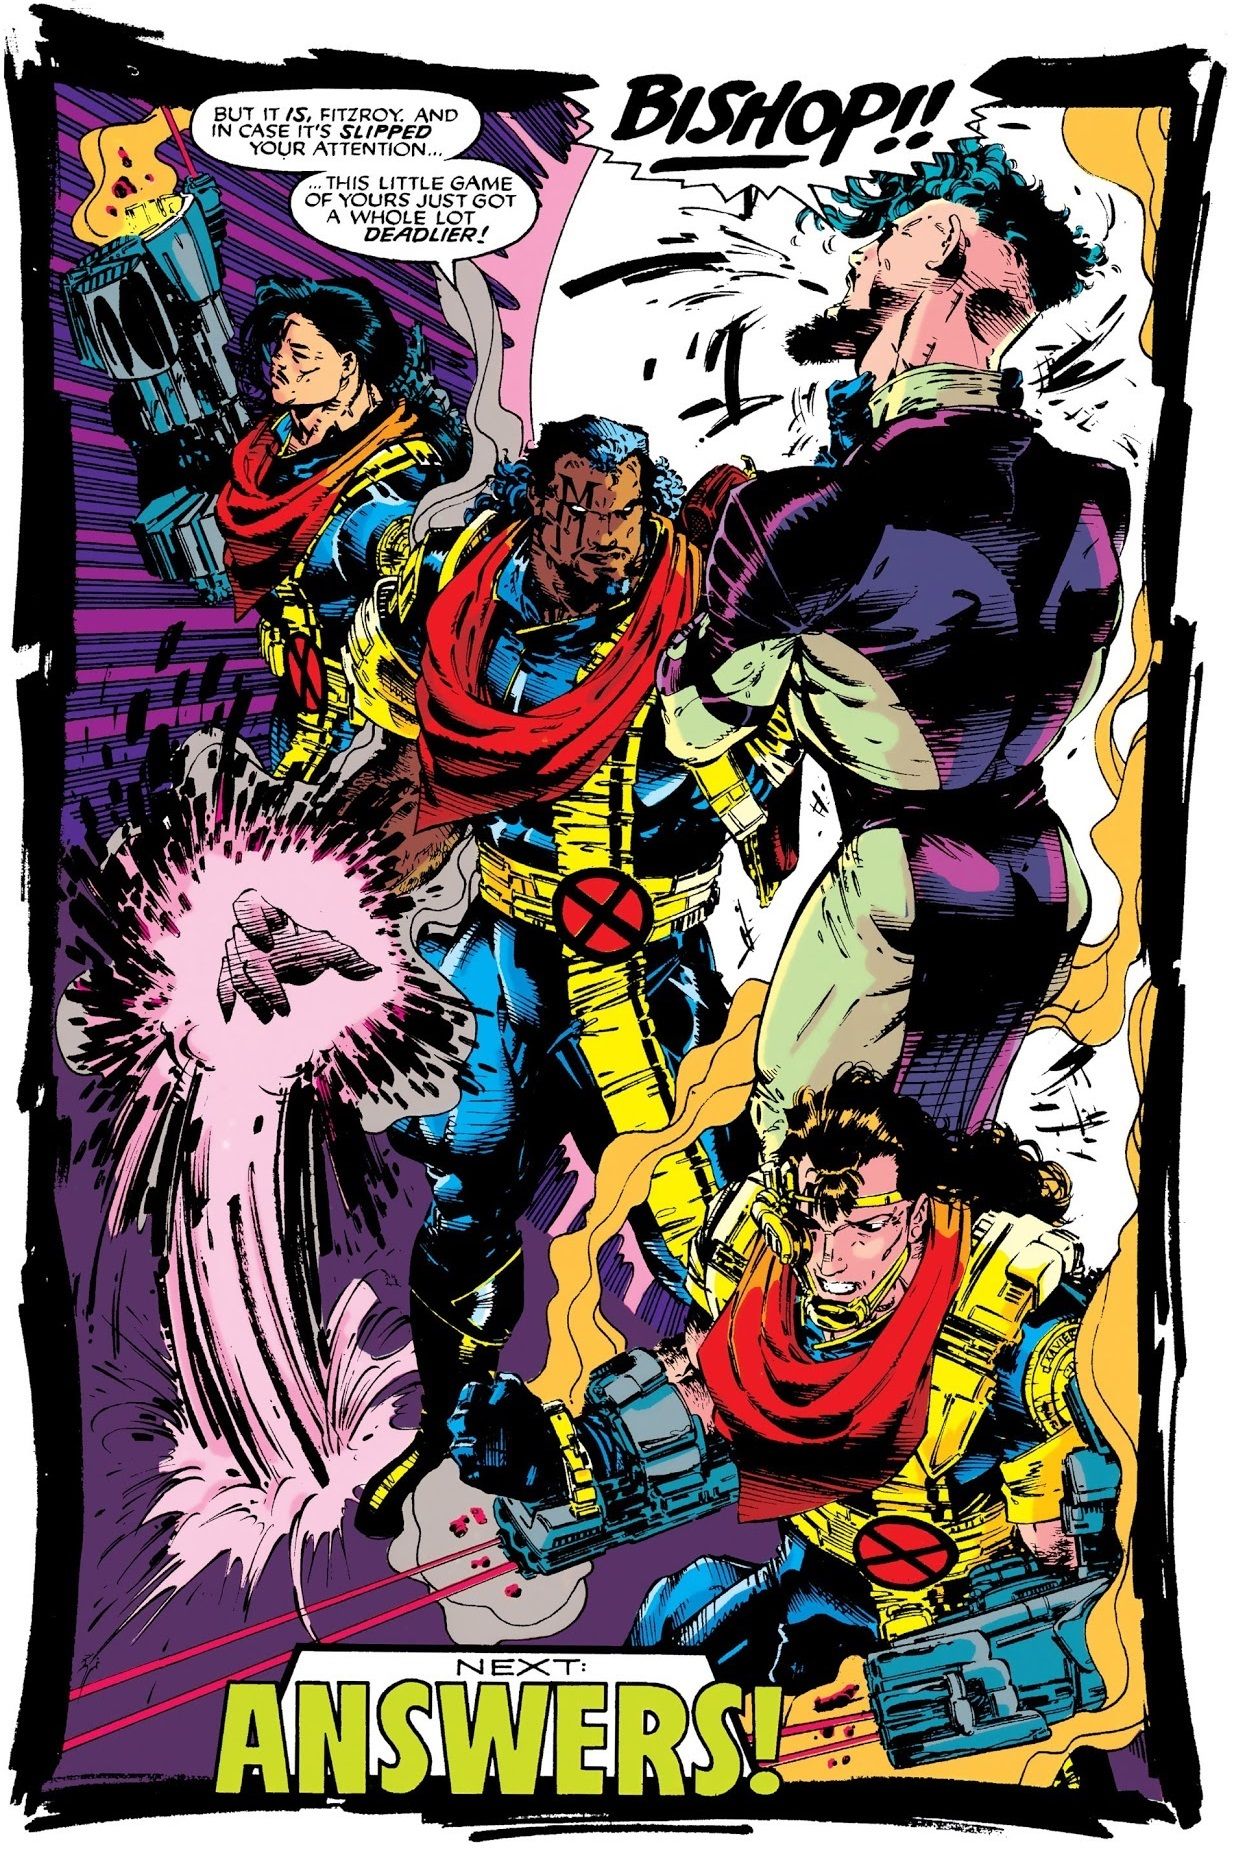 The final page of Uncanny X-Men #282